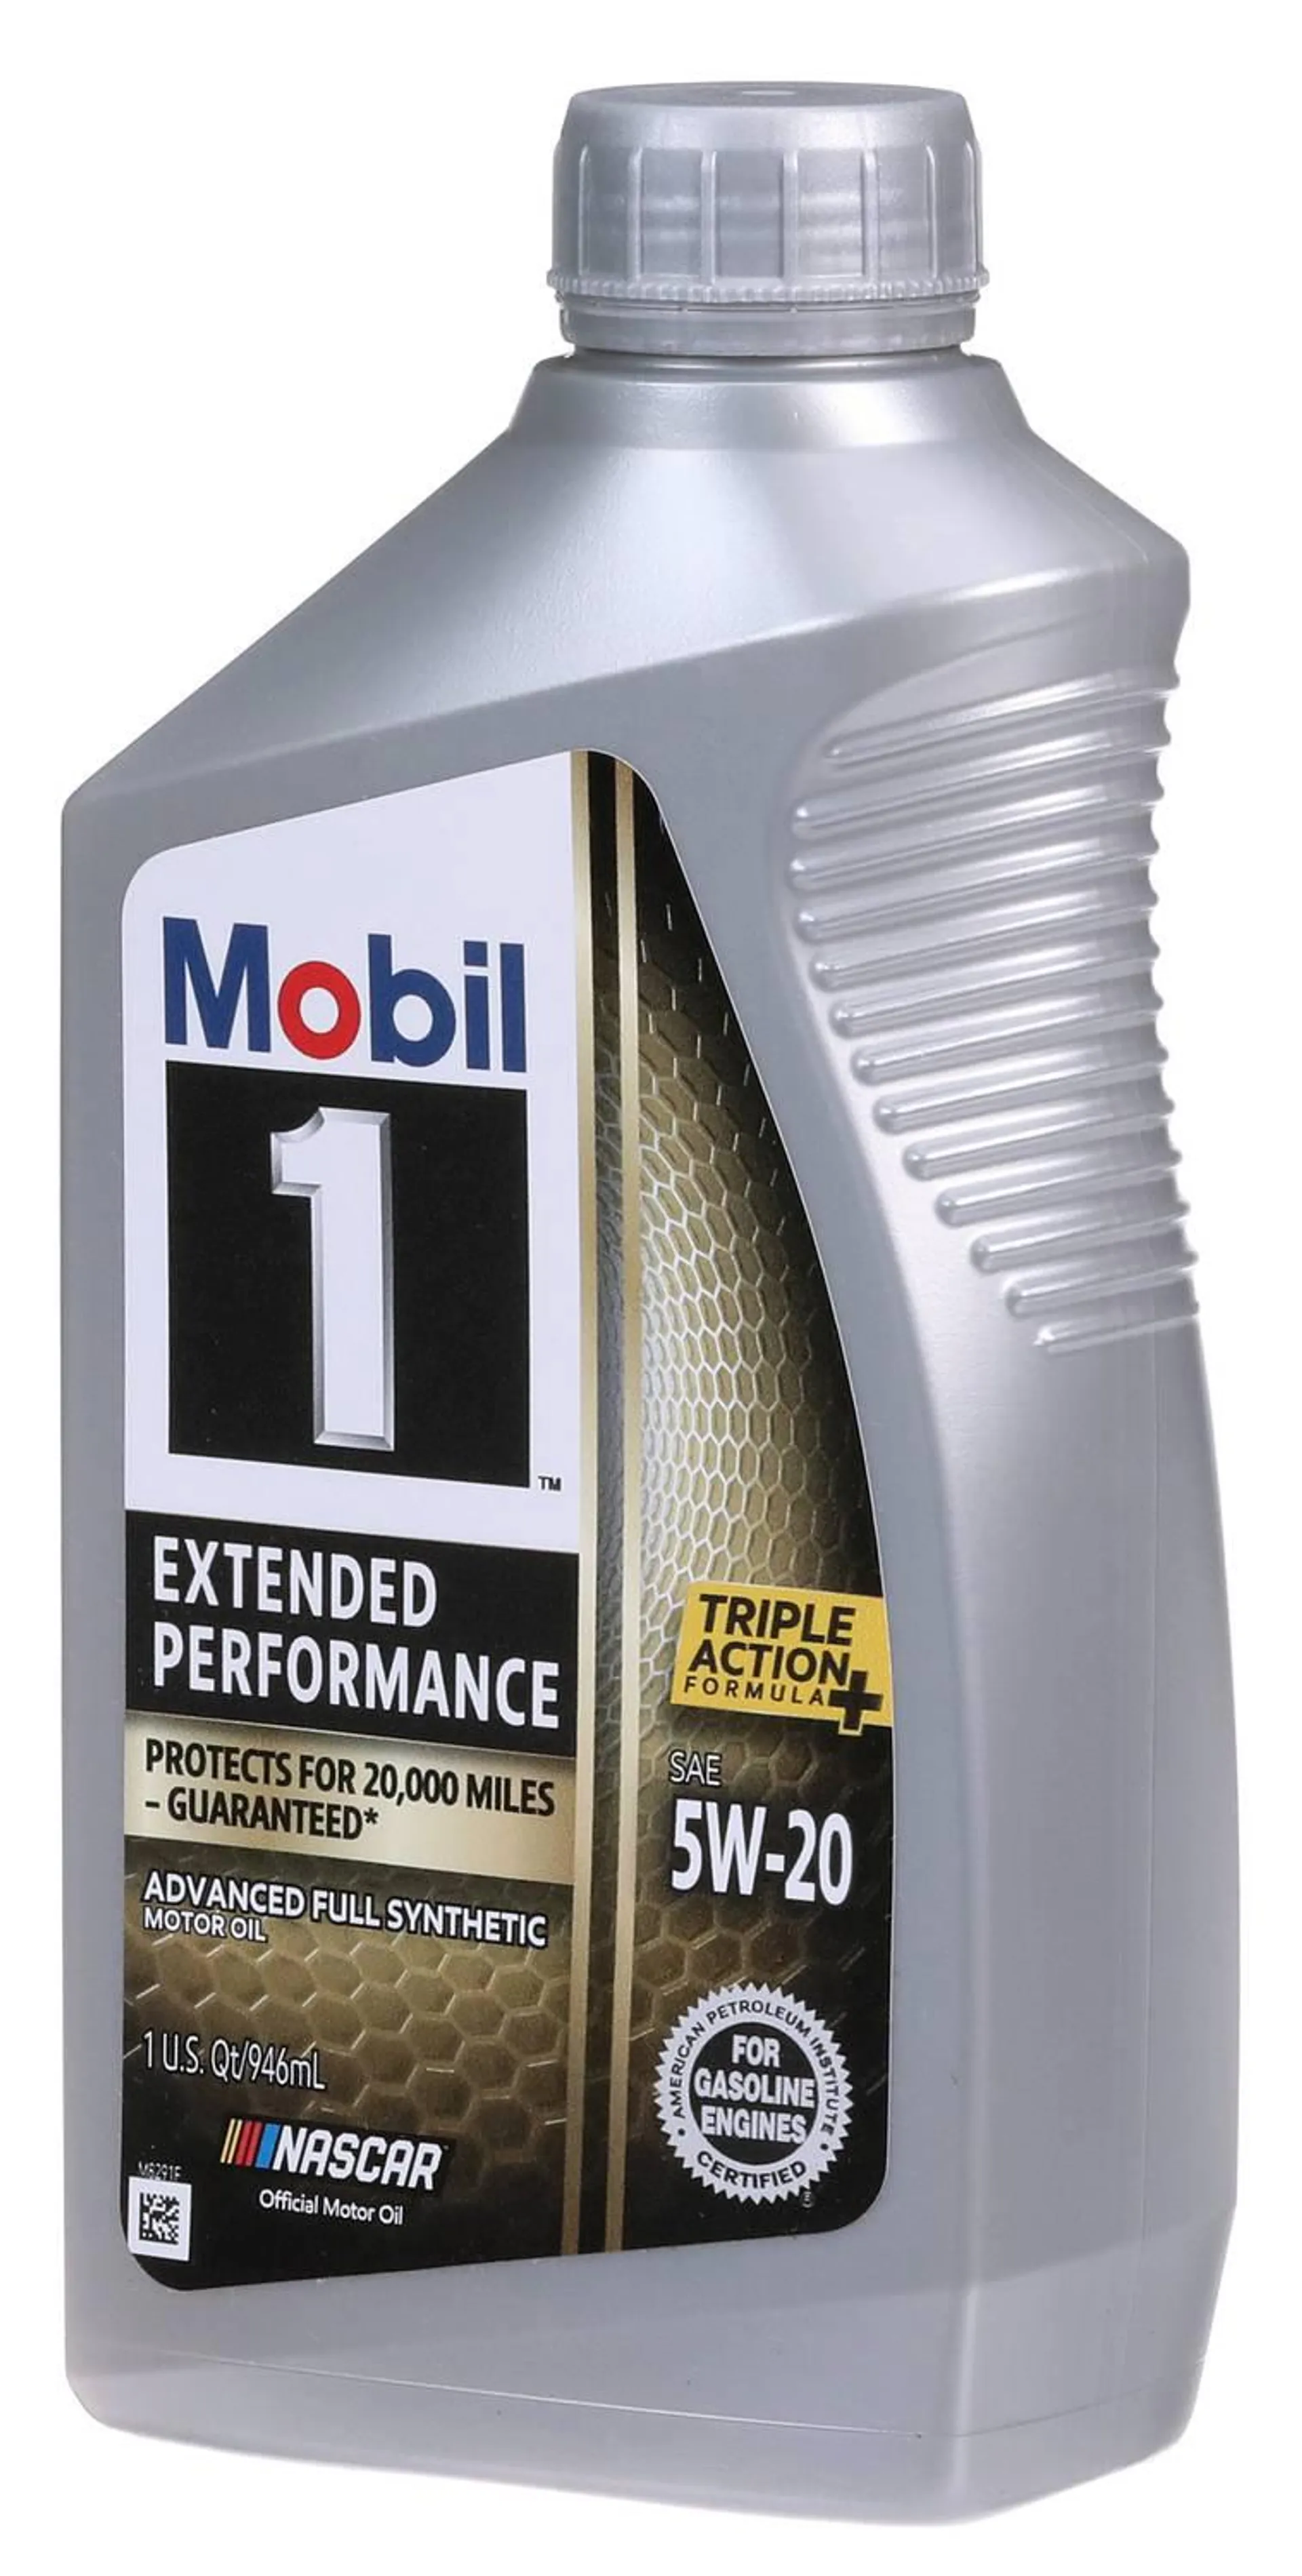 Mobil 1 Extended Performance Full Synthetic Full Synthetic Motor Oil 5W-20 1 Quart - 1-5-20EP